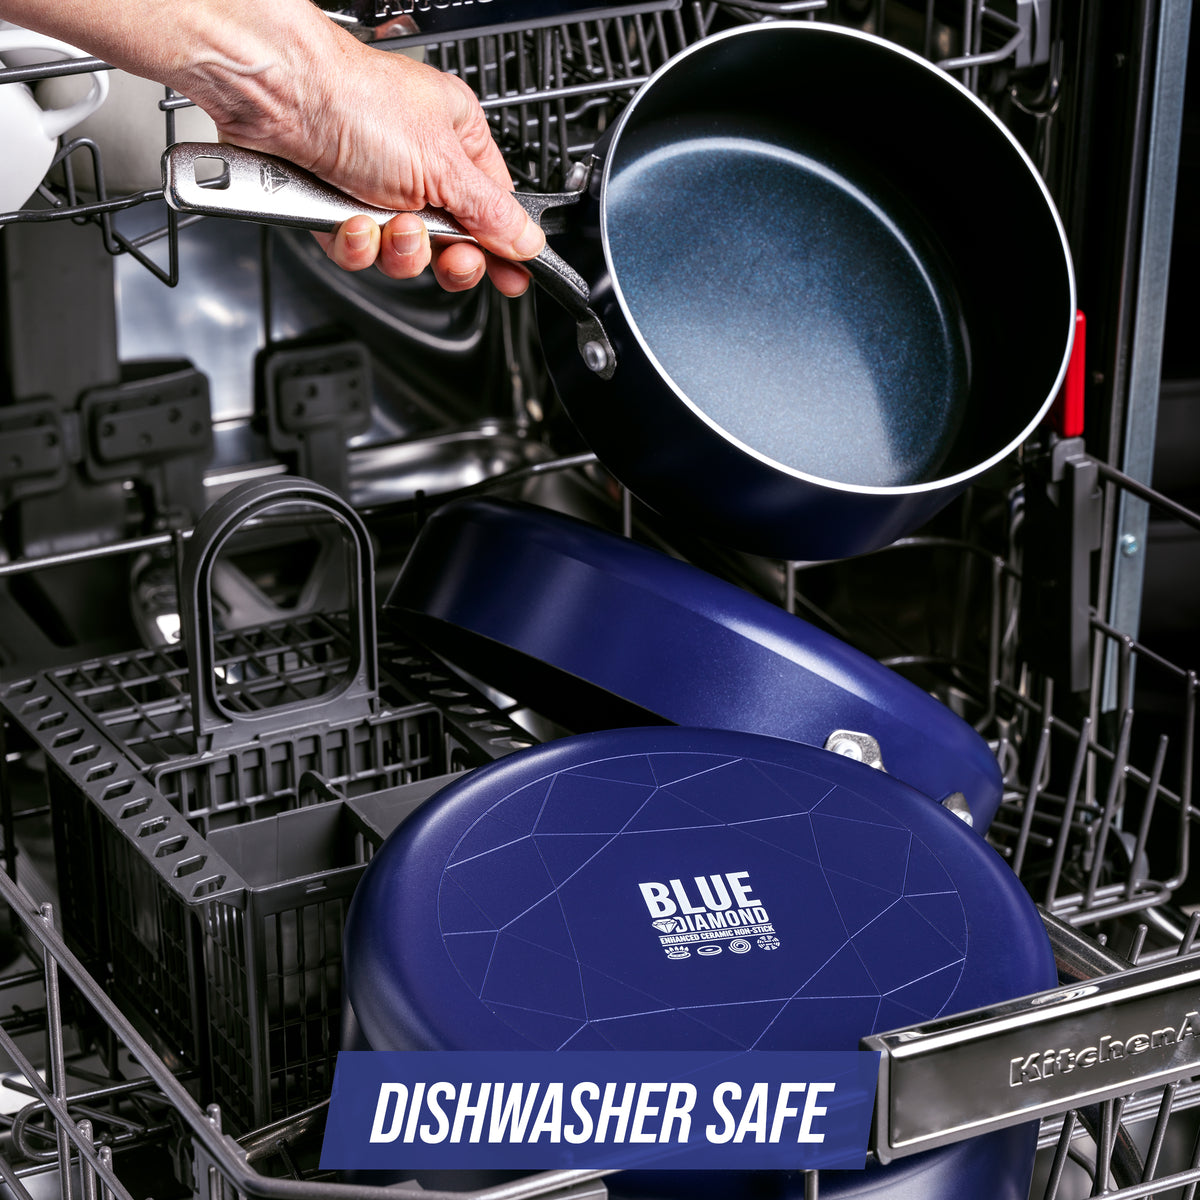 Dishwasher Safe Cookware